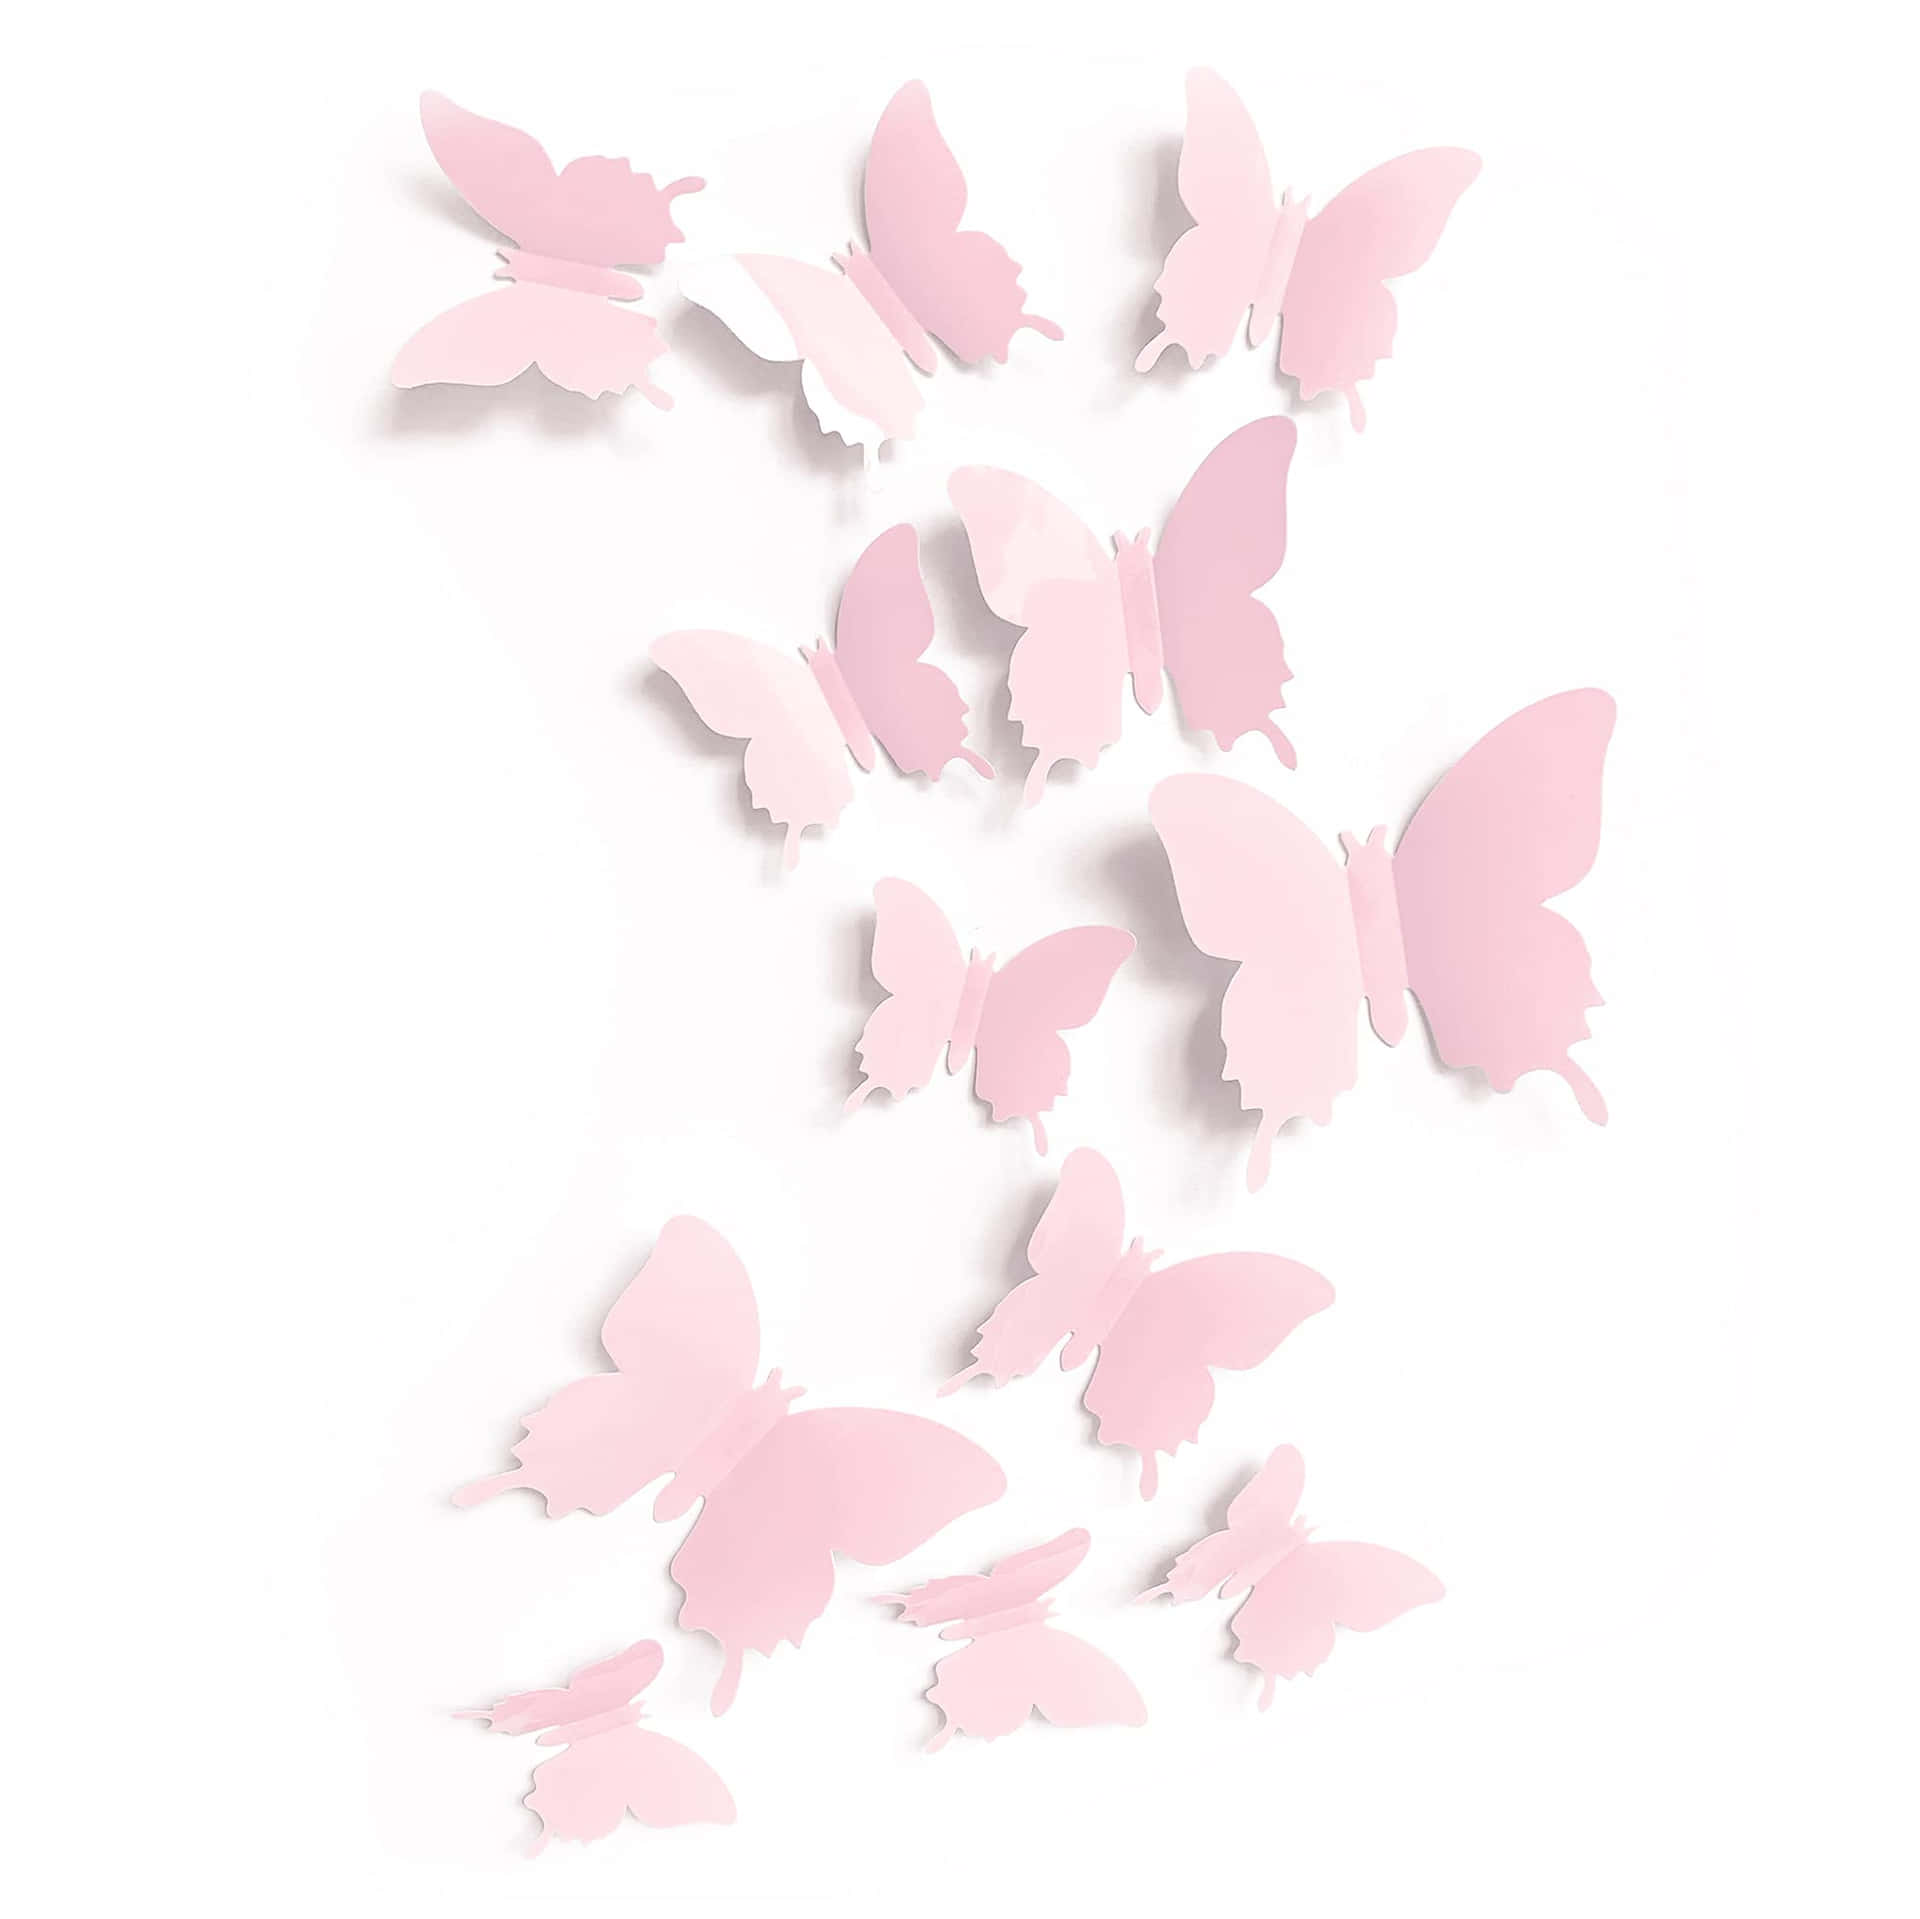 Enchanting Aesthetic Butterfly Wallpaper